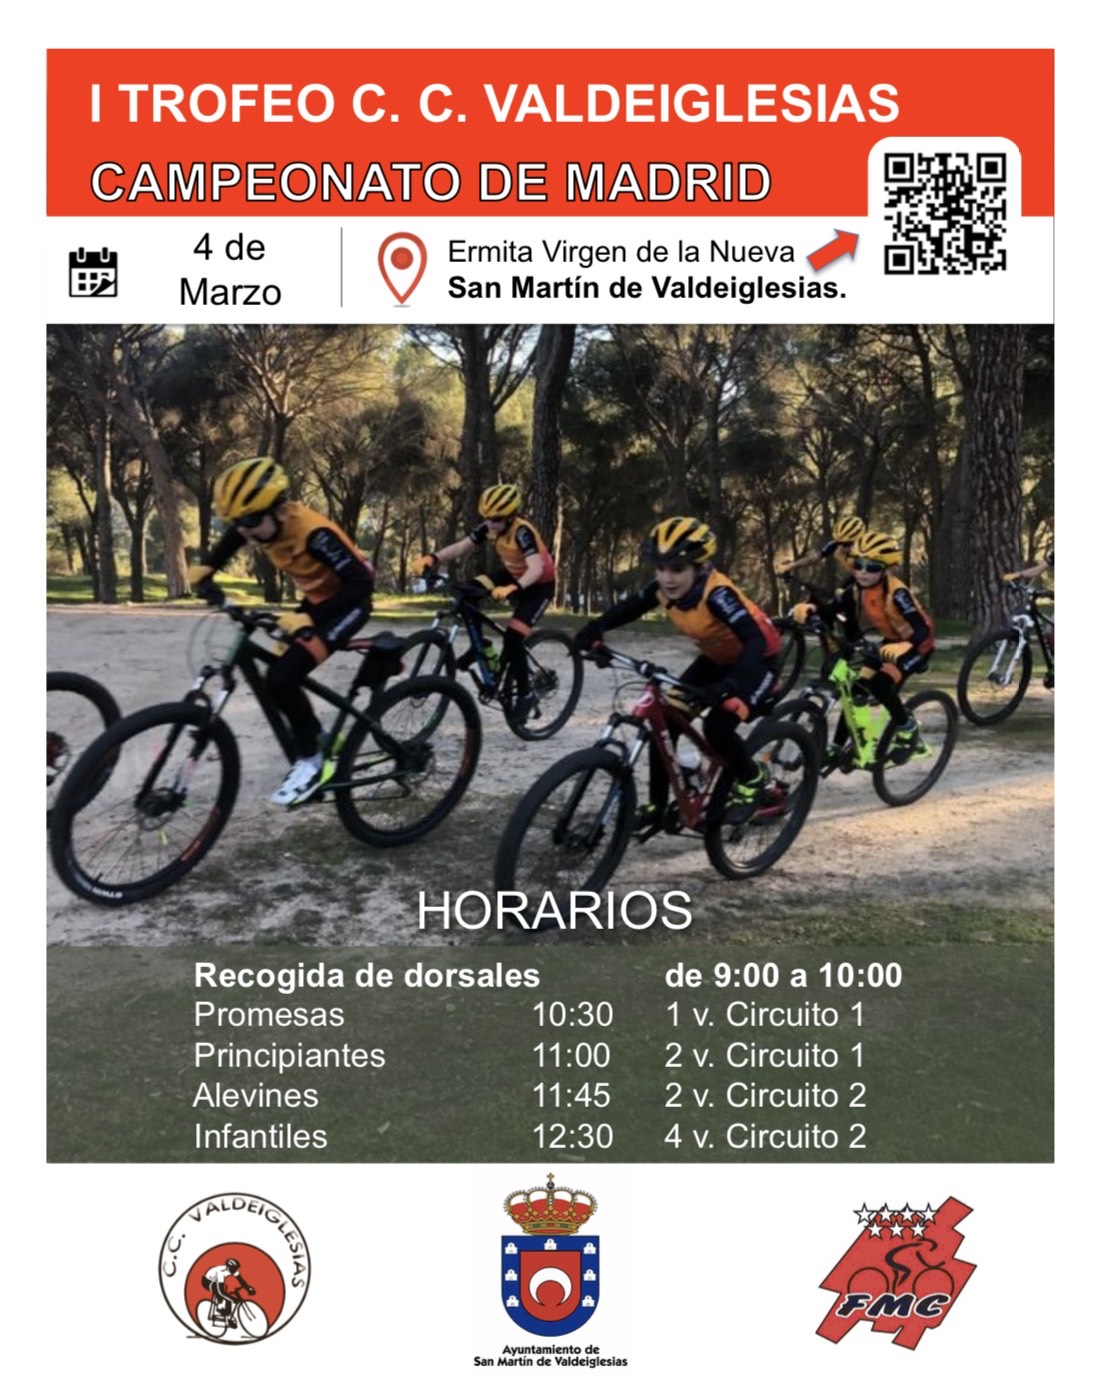 I Trofeo Club Ciclista Valdeiglesias – Campeonato de Madrid